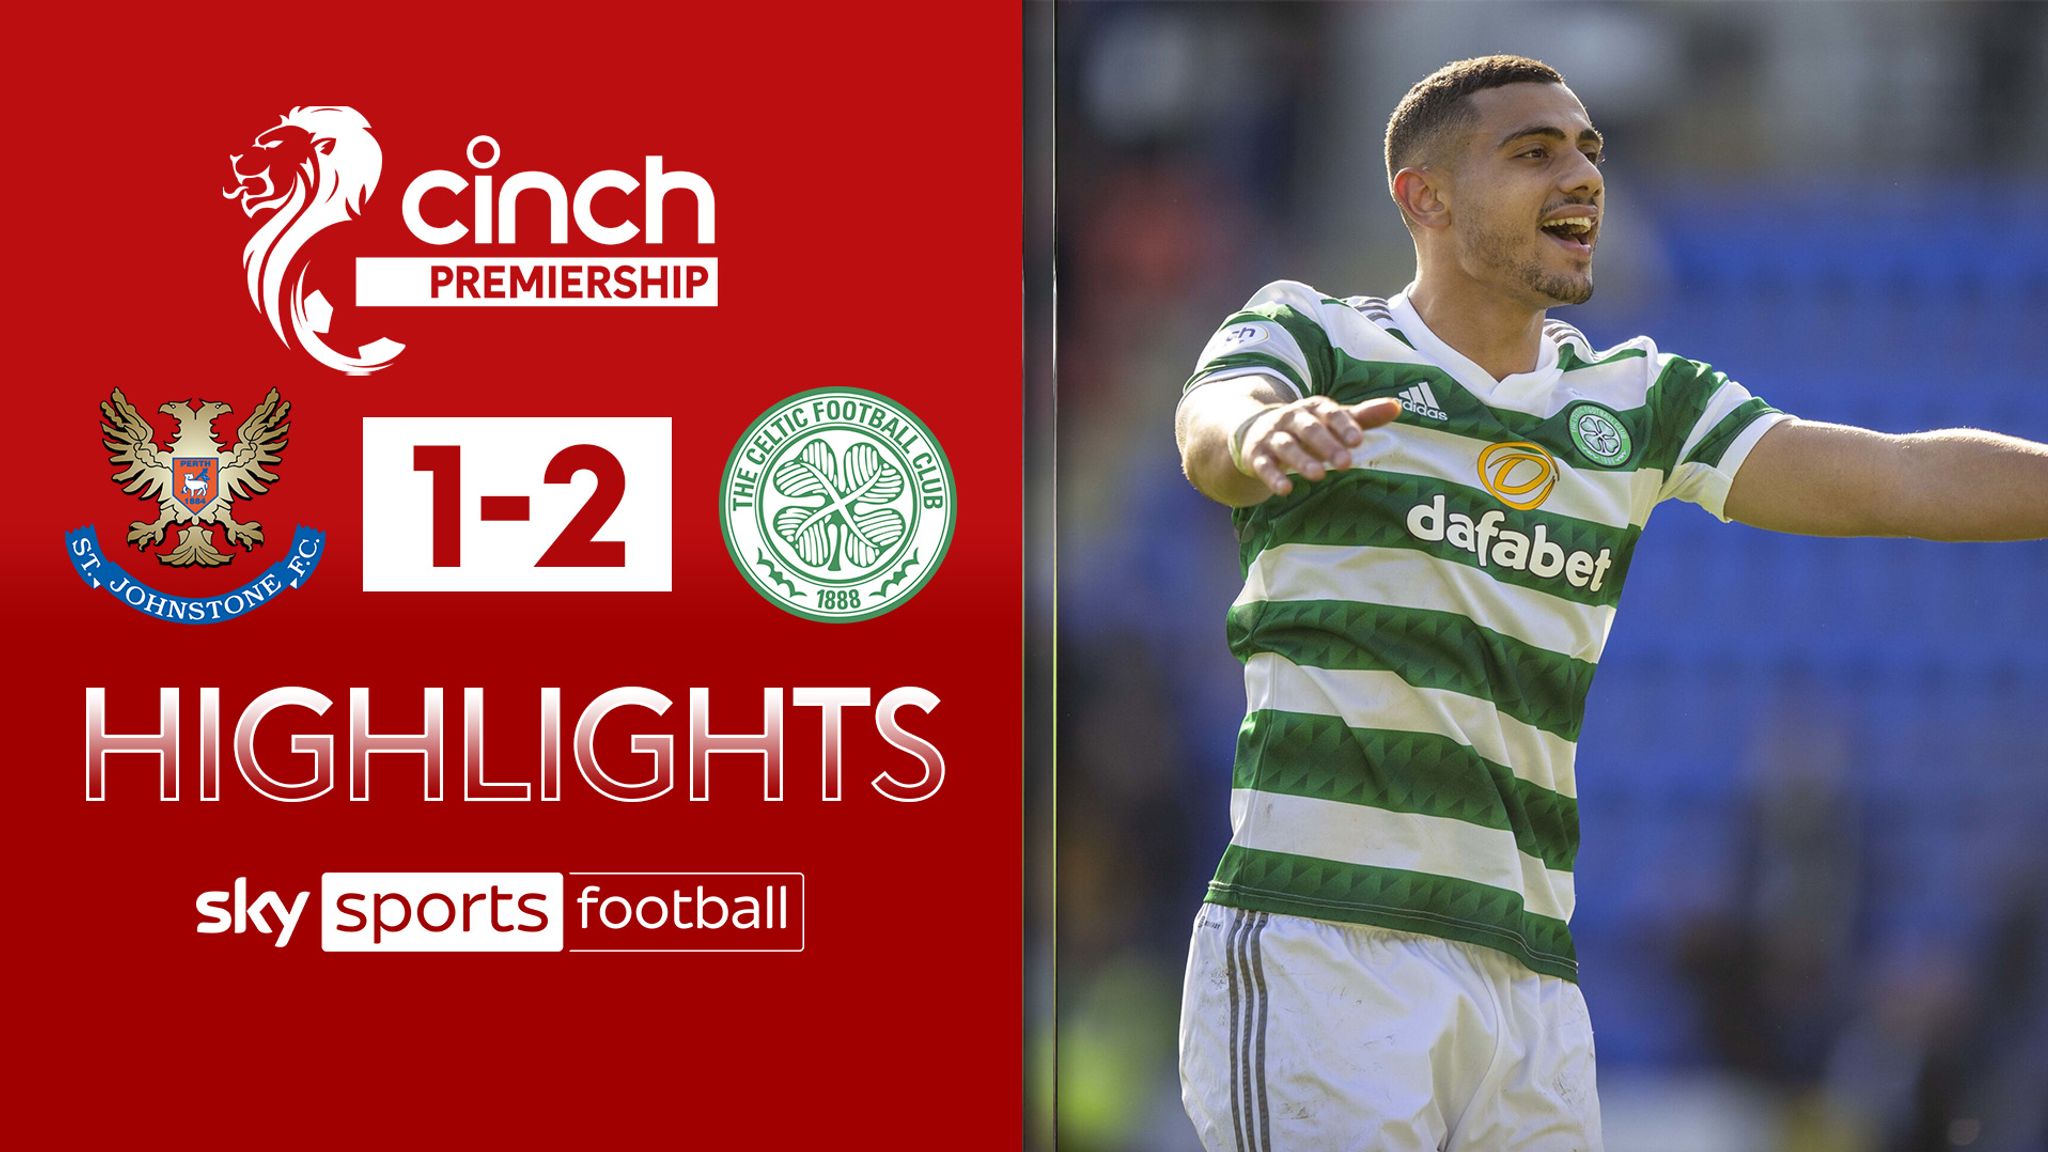 St Johnstone 1-2 Celtic Scottish Premiership highlights Video Watch TV Show Sky Sports